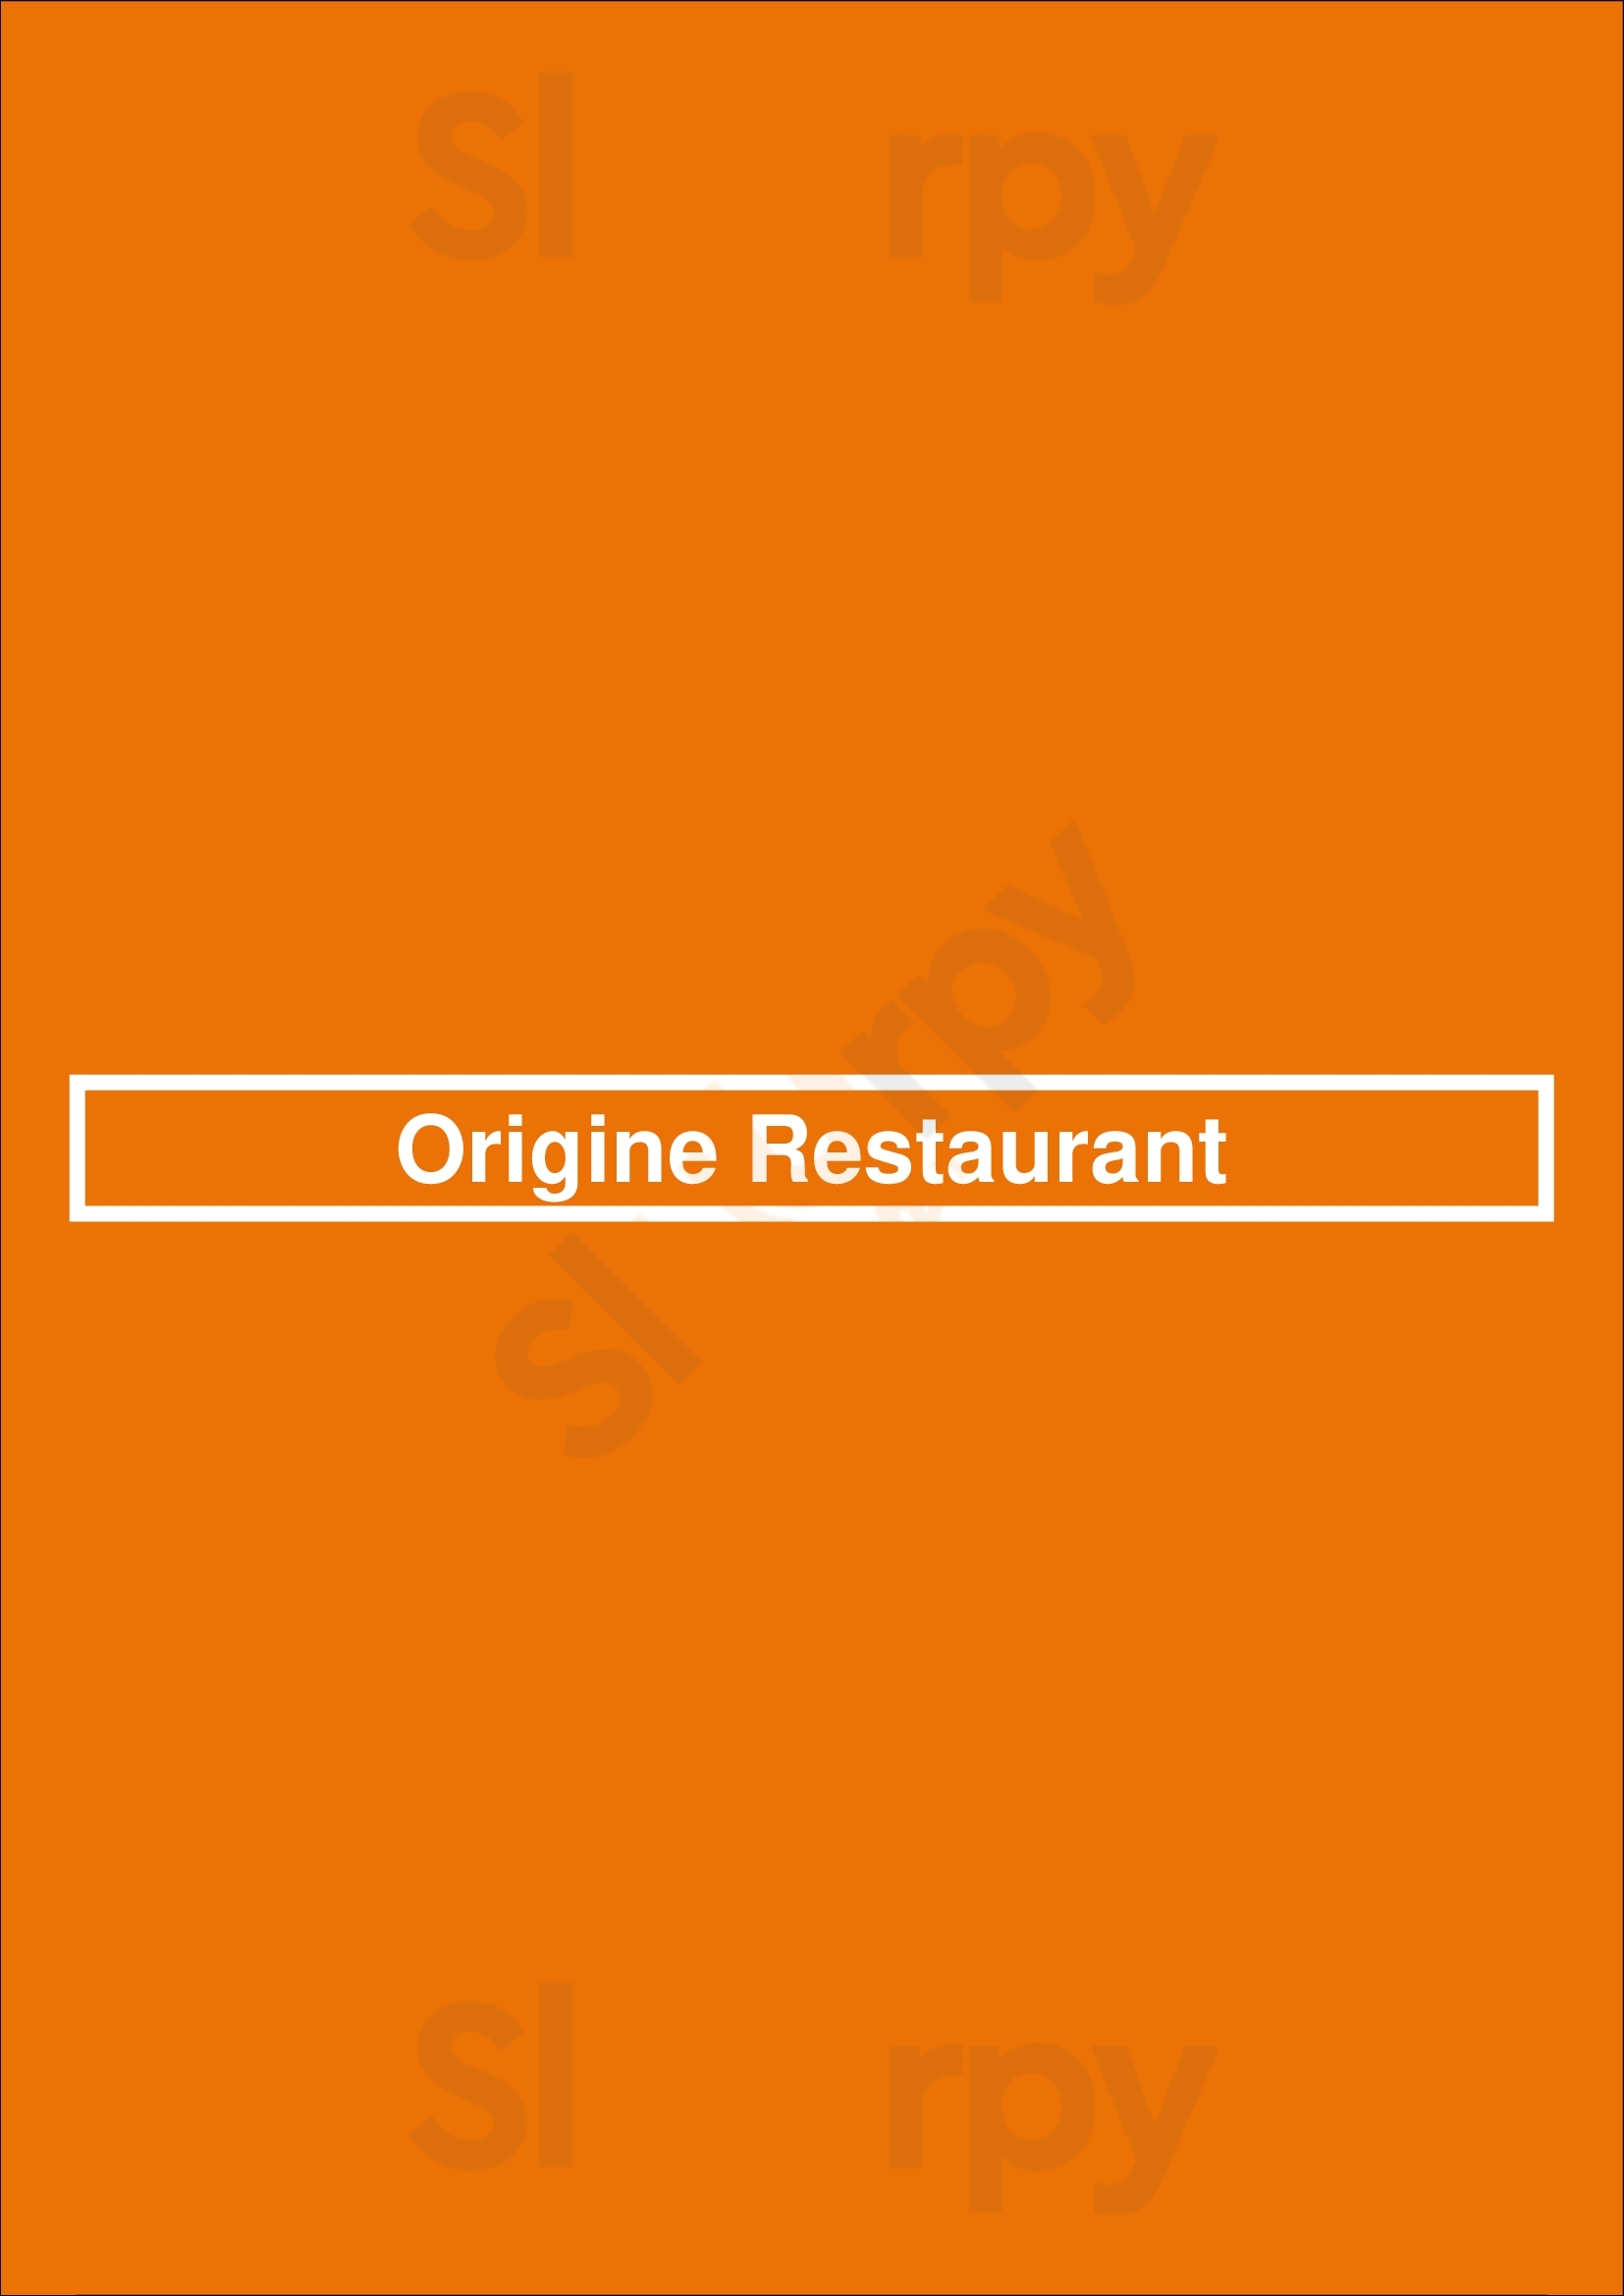 Origine Restaurant Etterbeek Menu - 1